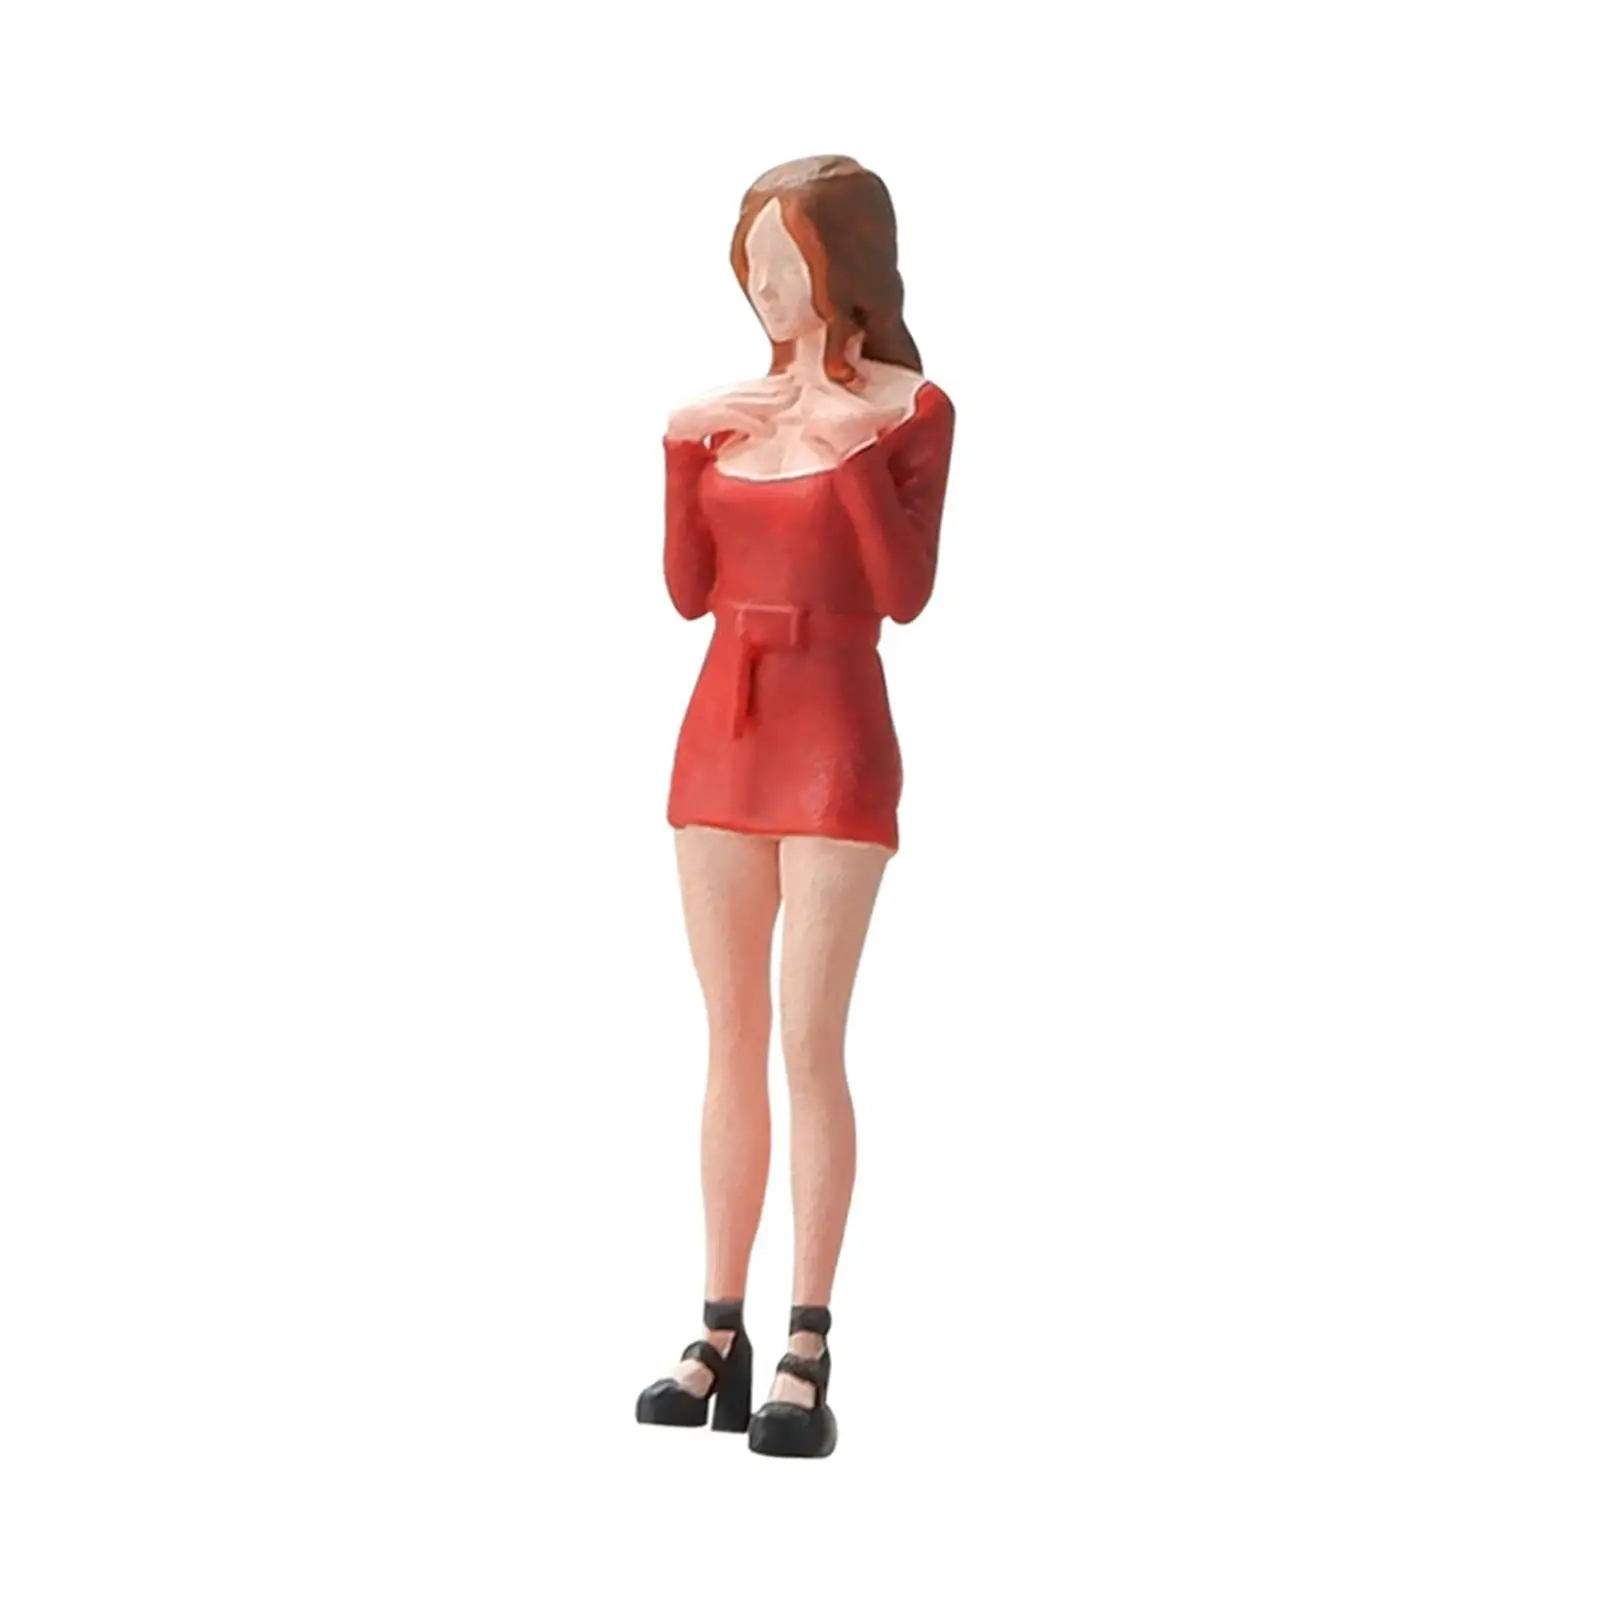 1/64 Hip Skirt Girl Figure Model Fairy Garden DIY Projects Train Railway Collections Layout Movie Props S Gauge Resin Figurine